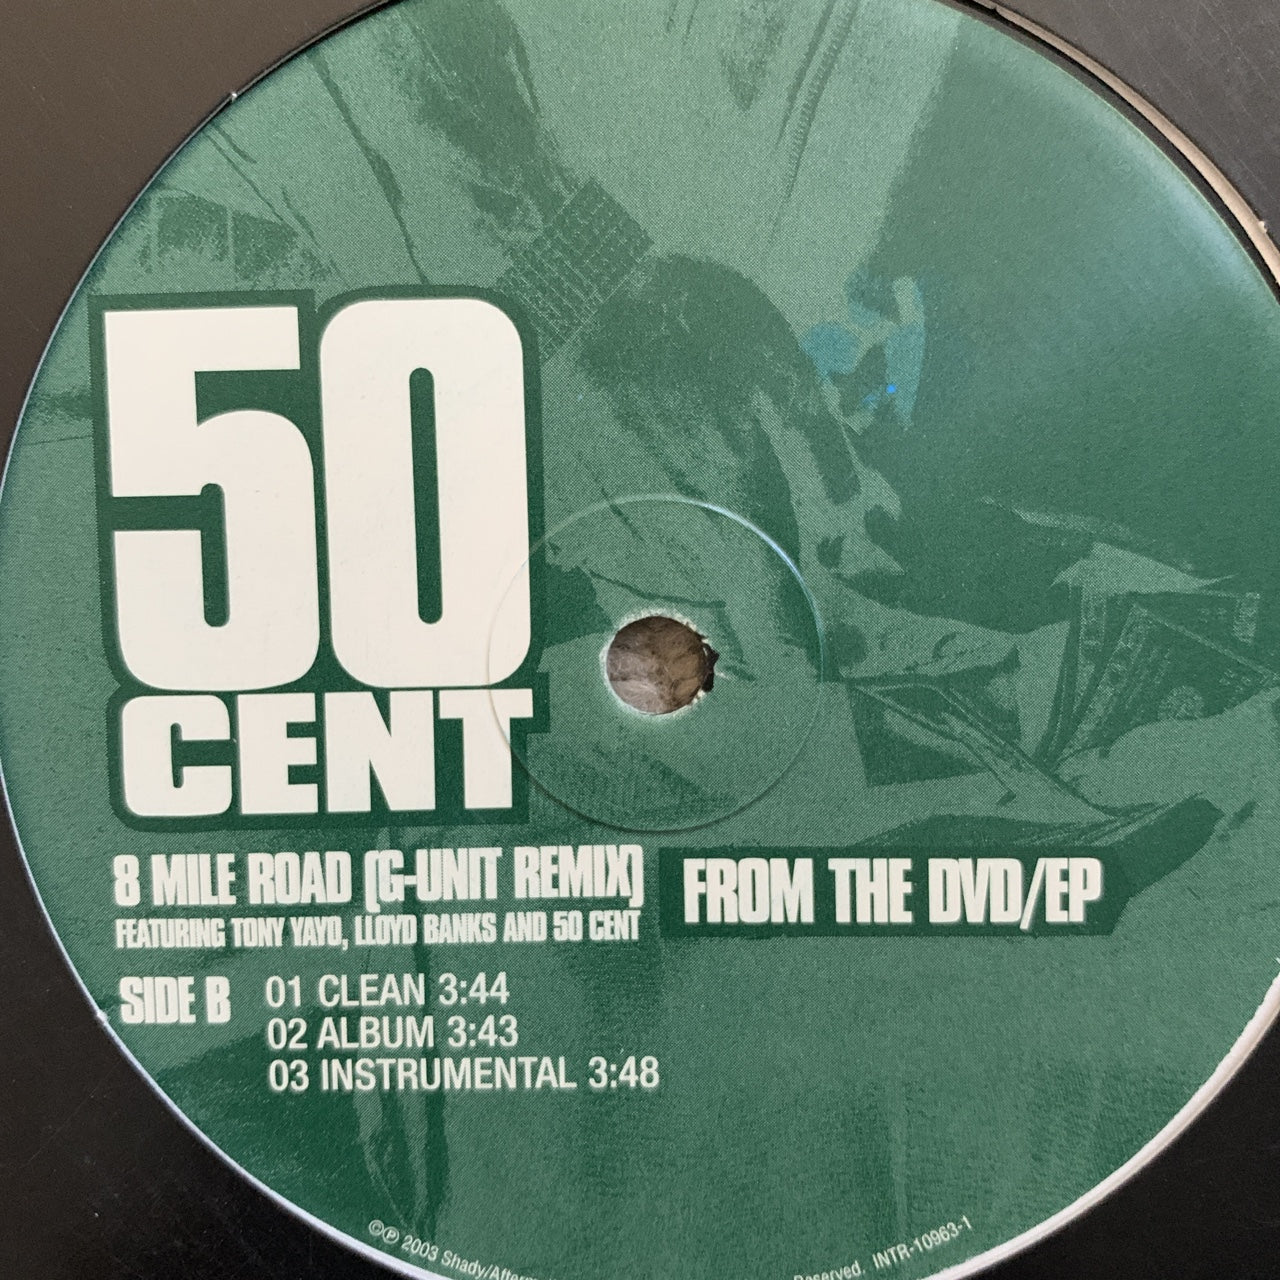 50 Cent “In Da Hood” / “8 Mile Road”